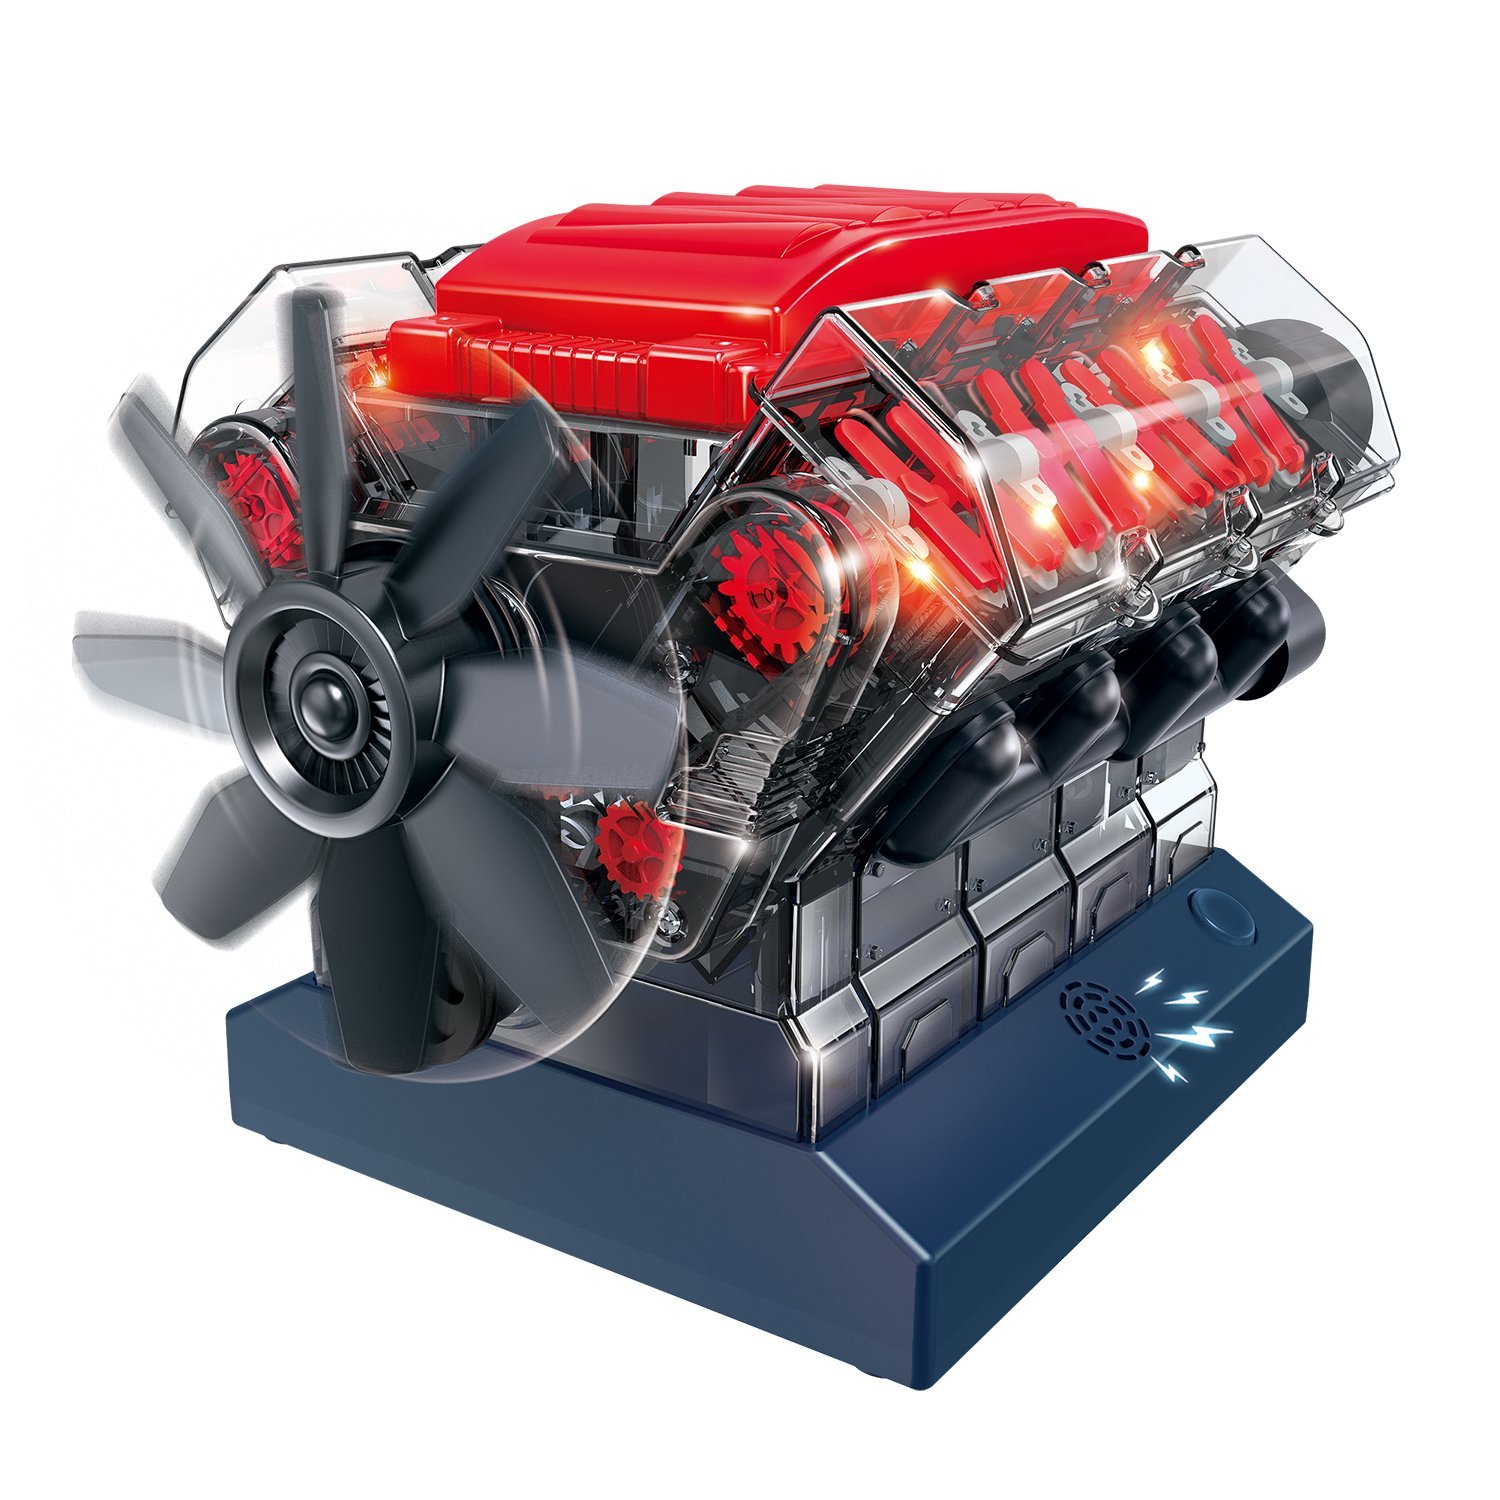 V8 Model Engine